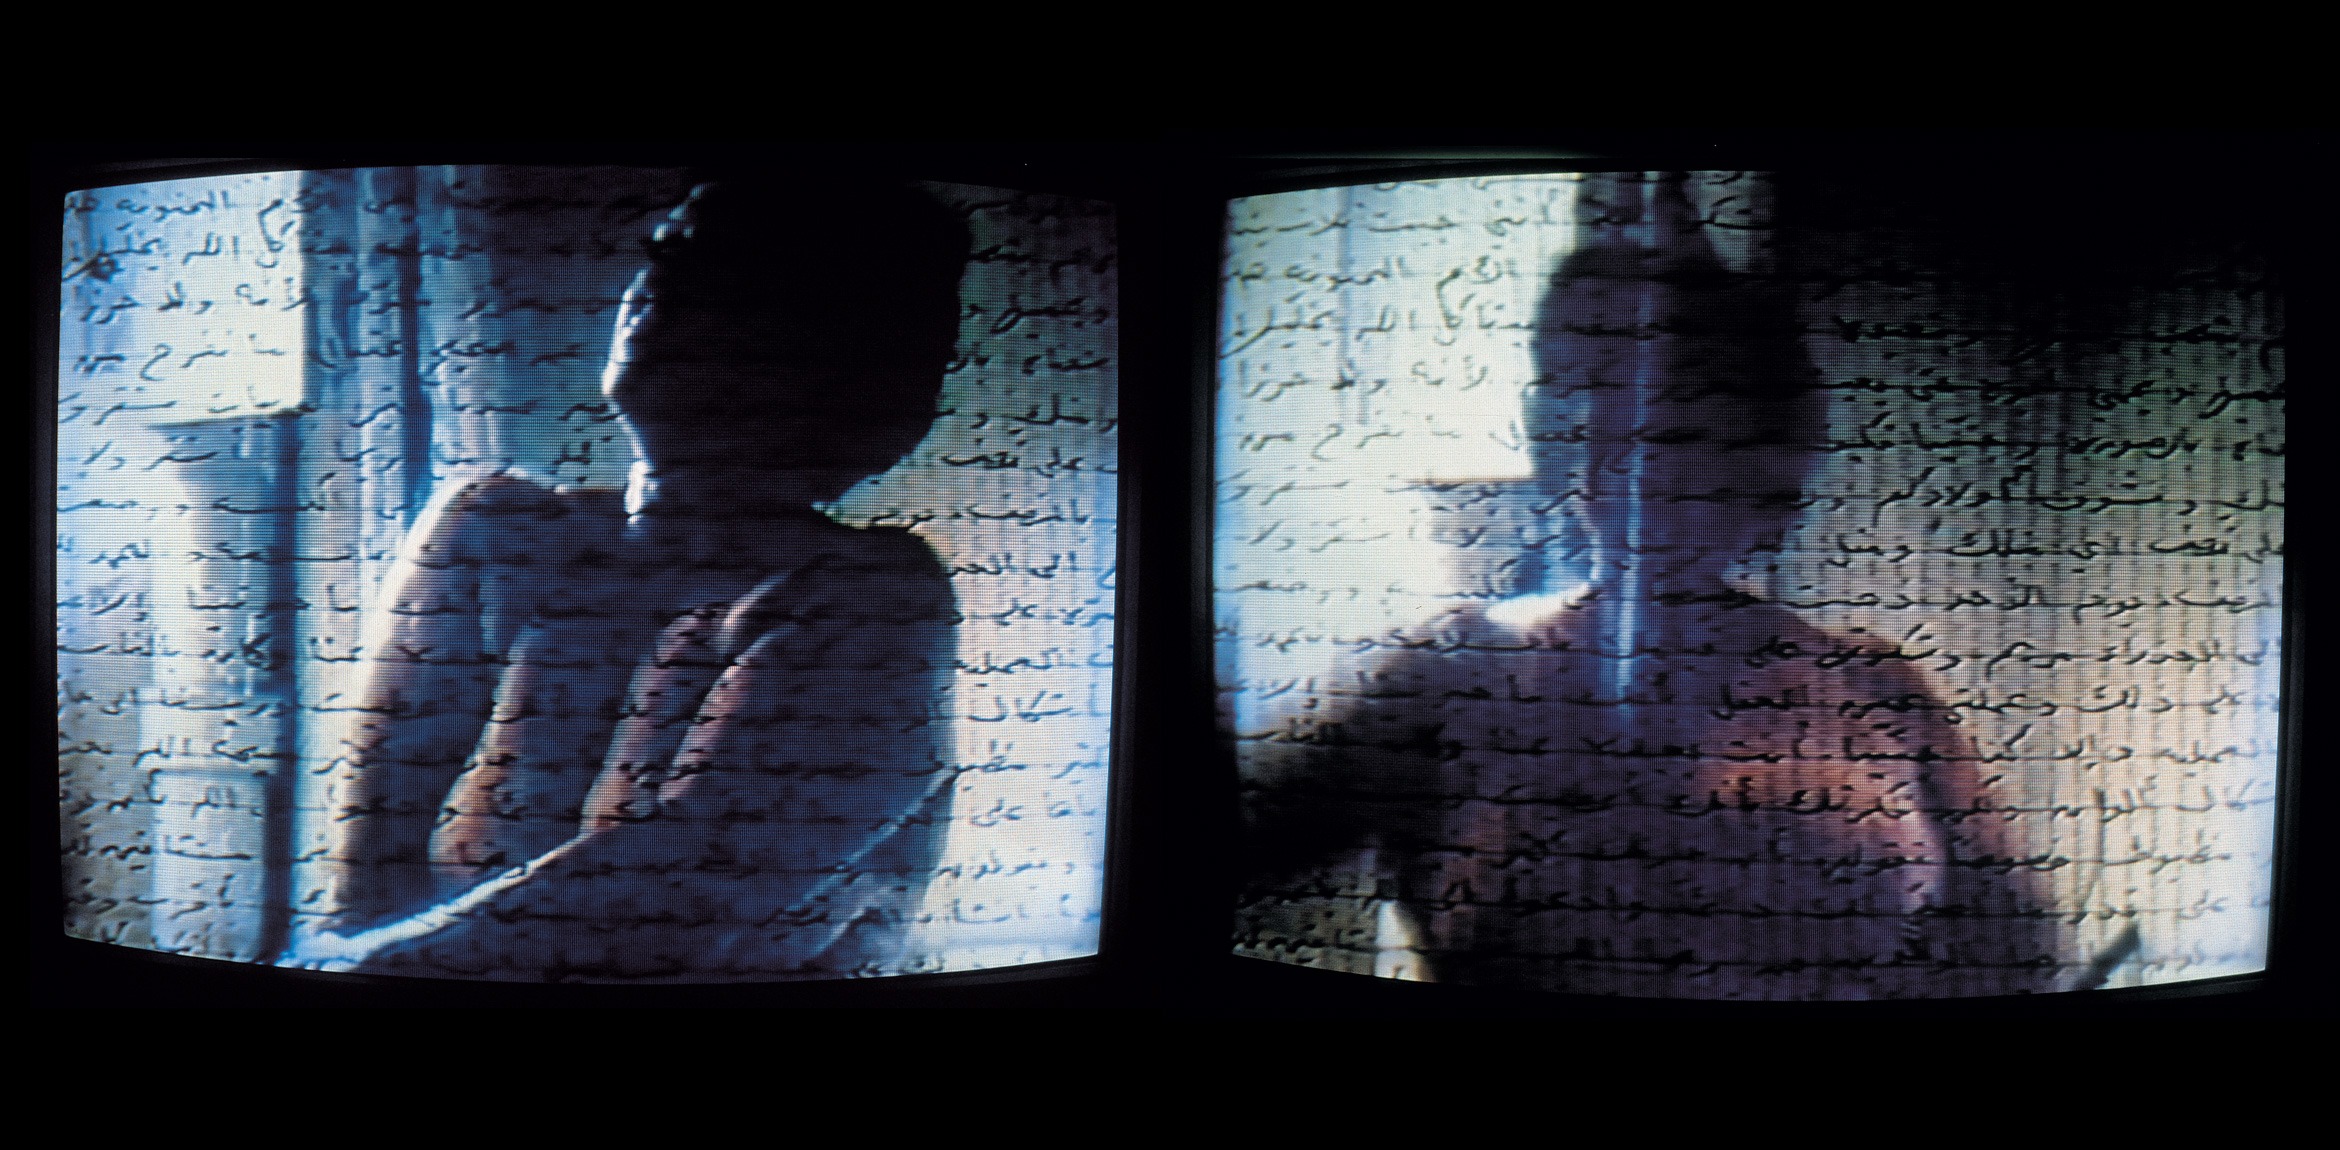 Two stills from Mona Hatoum's film 